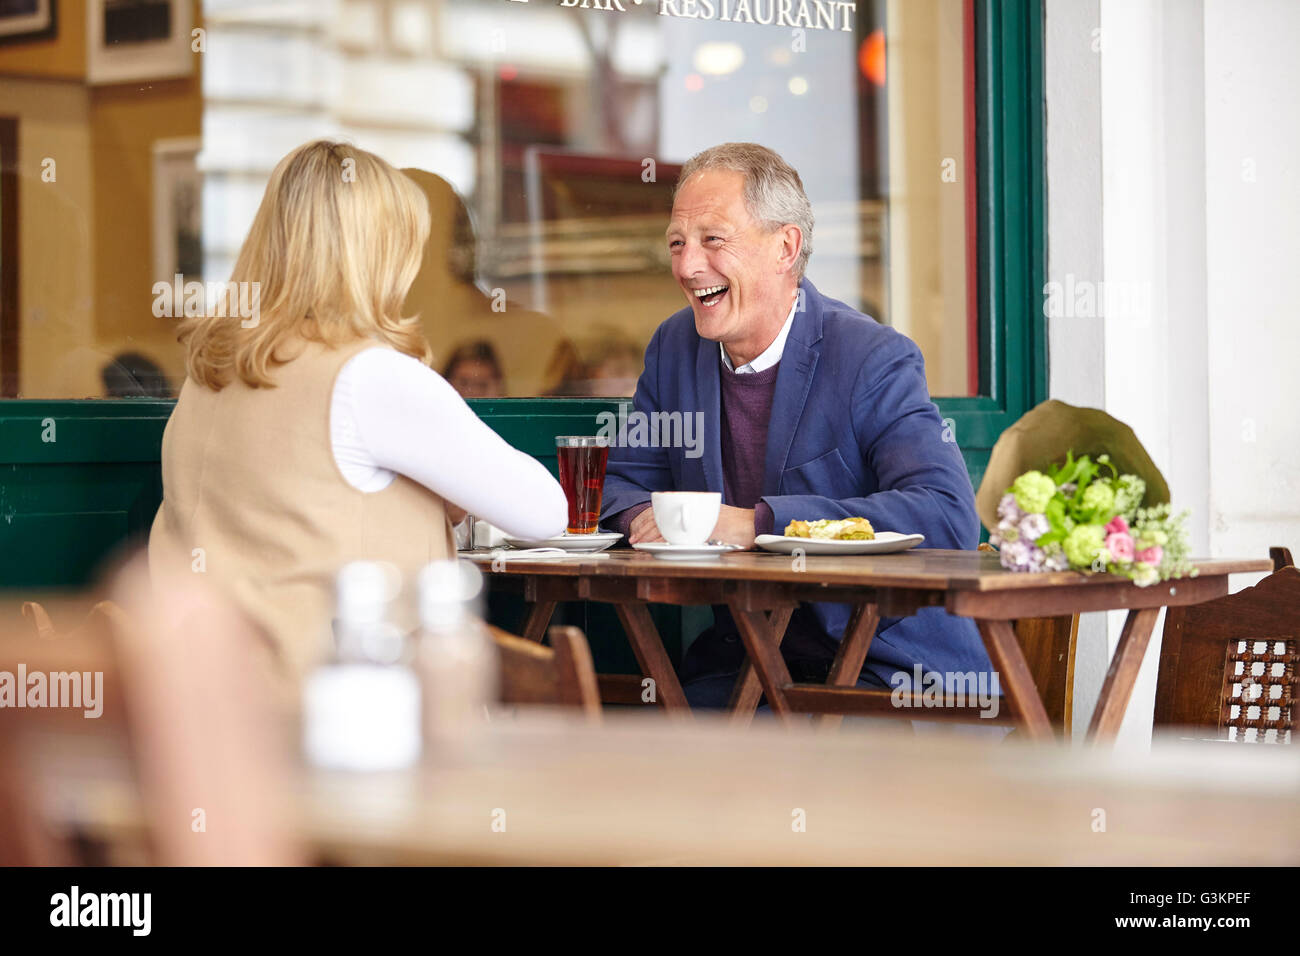 Älteres Paar am Tag gemeinsam lachen am Bürgersteig Café-Tisch Stockfoto